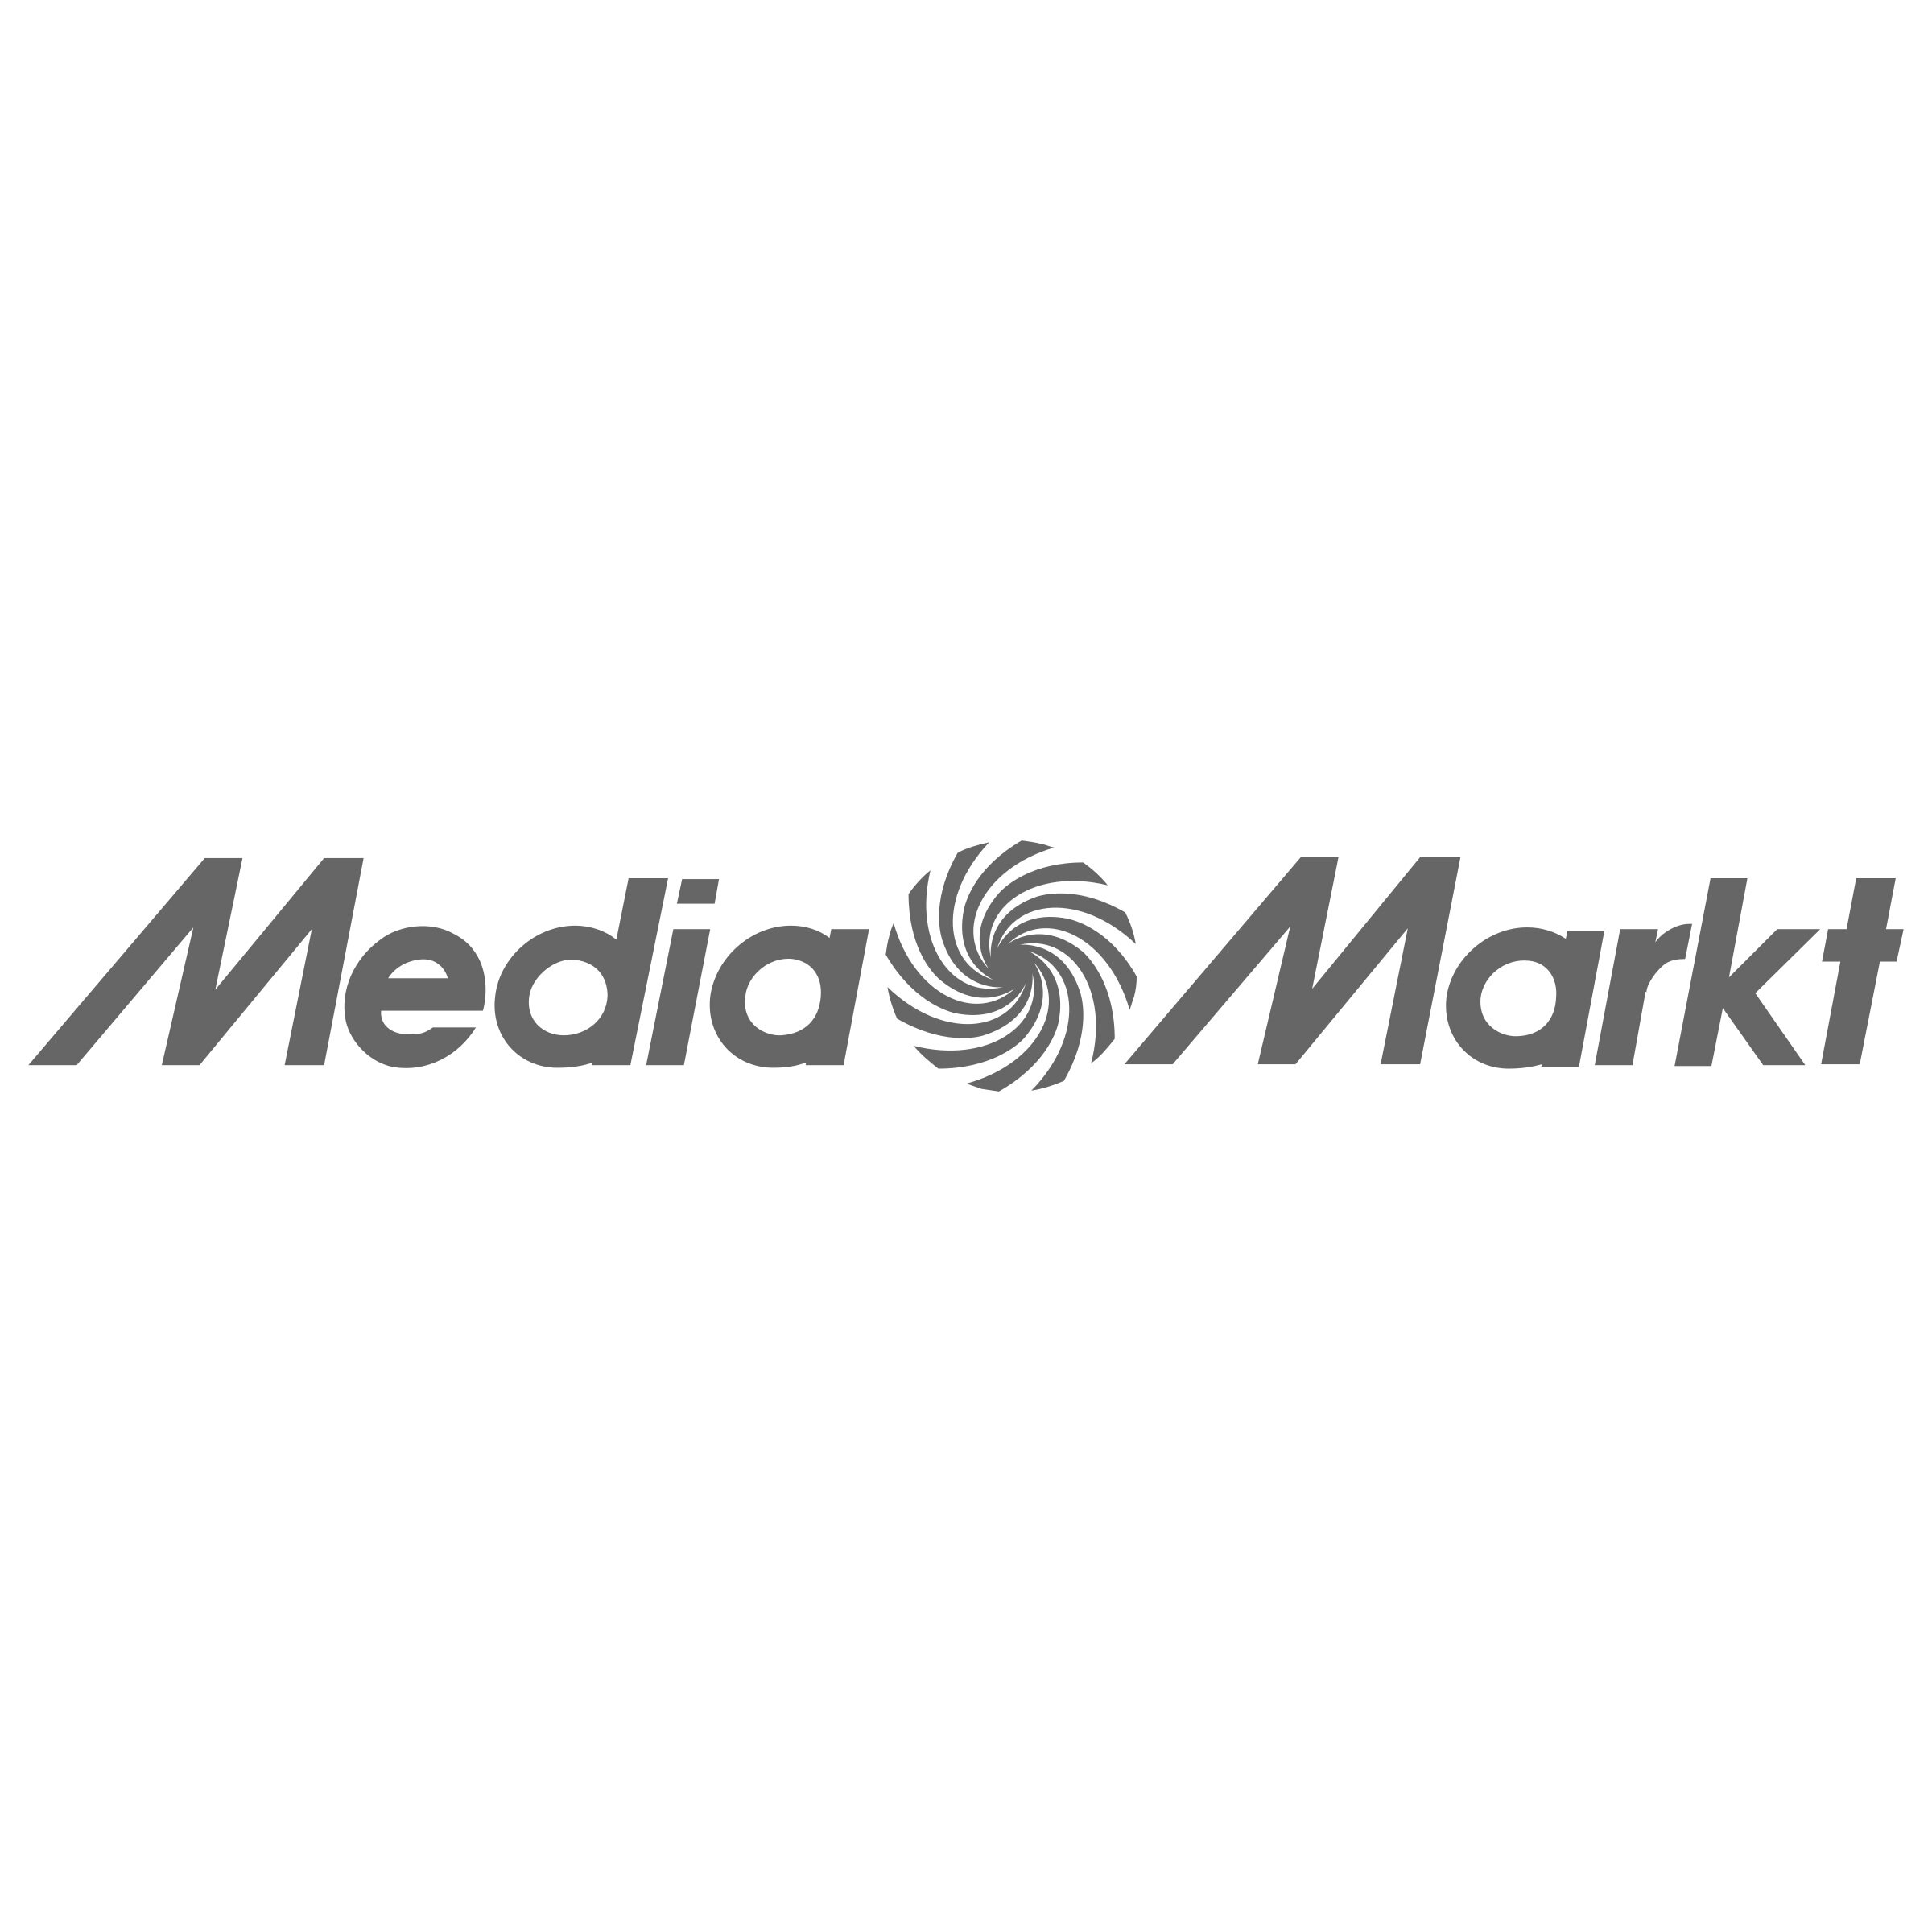 mediamarkt-logo-png-transparent.jpg